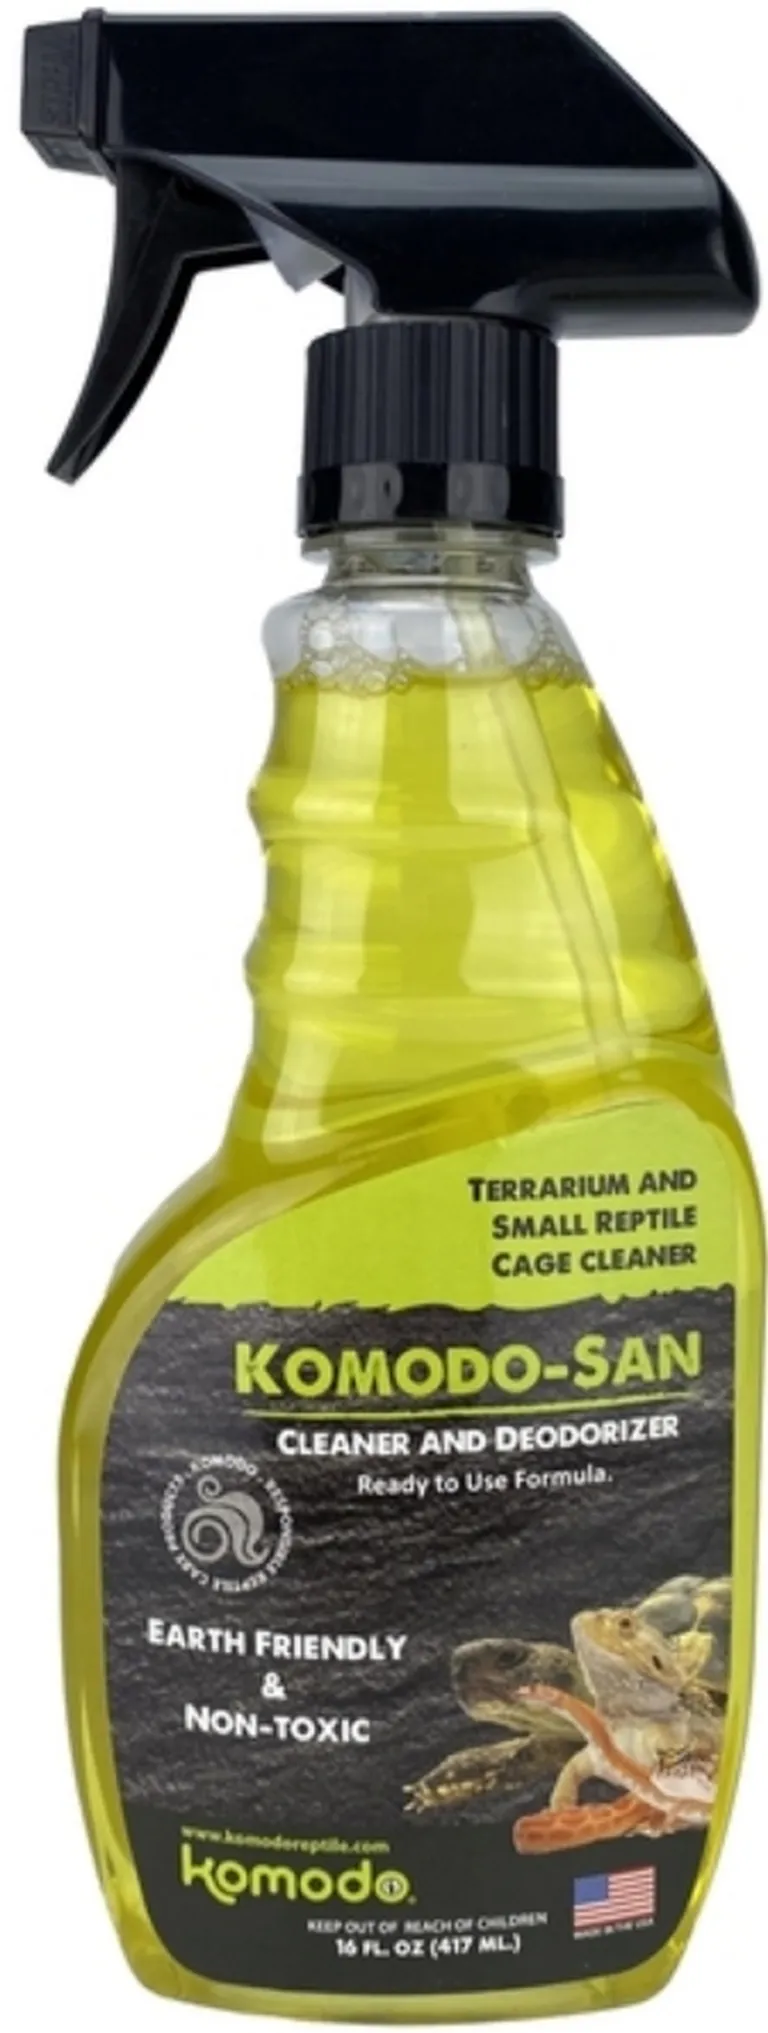 Komodo San Cleaner and Deodorizer Spray Photo 2